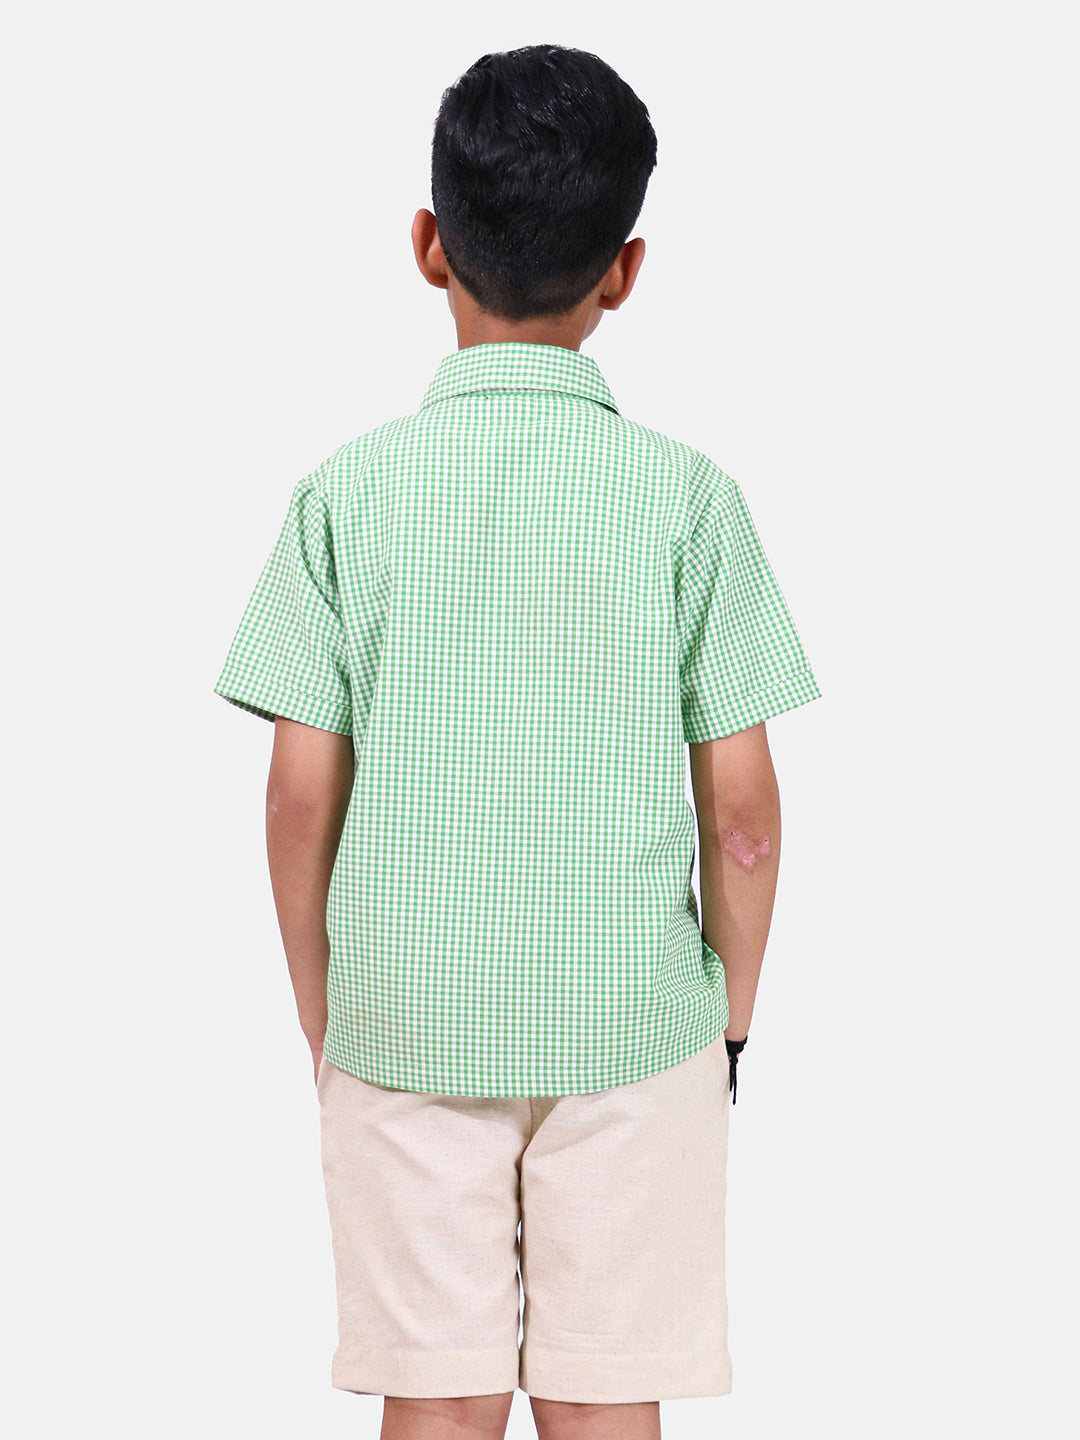 Boys Green Checks Cotton Shirt